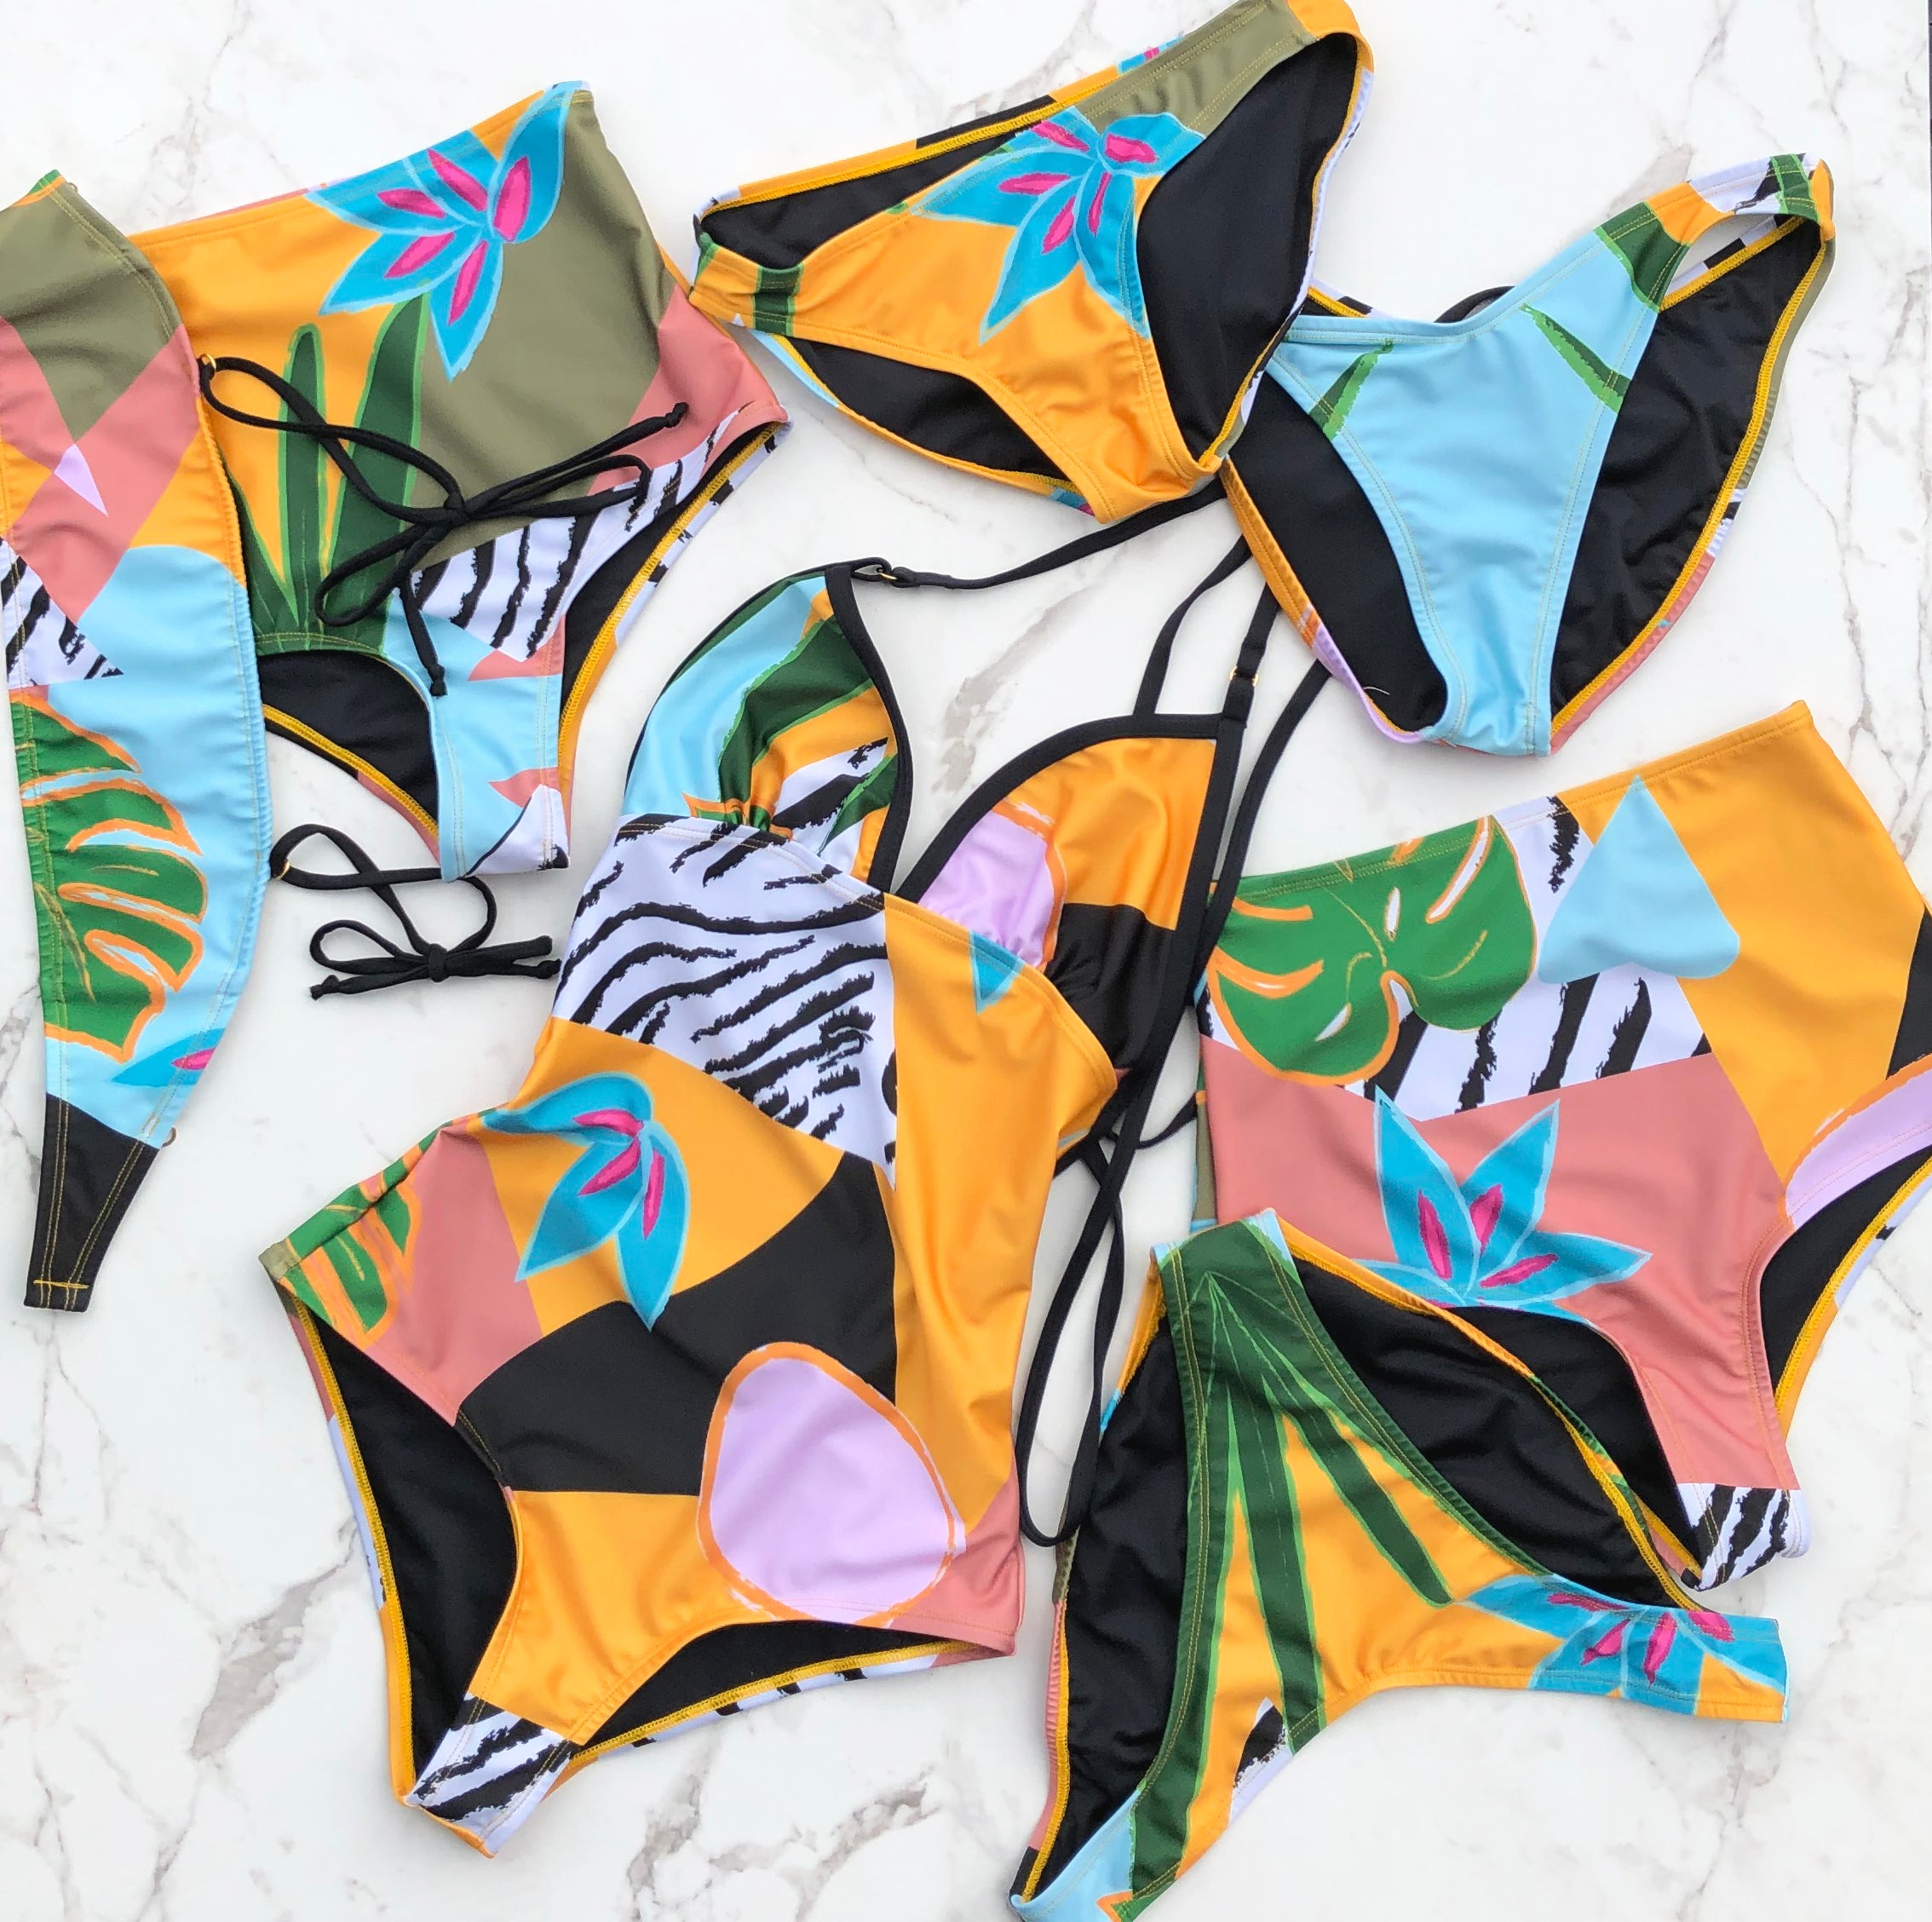 MICHELLE – One piece in Tropical print - Selfish swimwear one piece